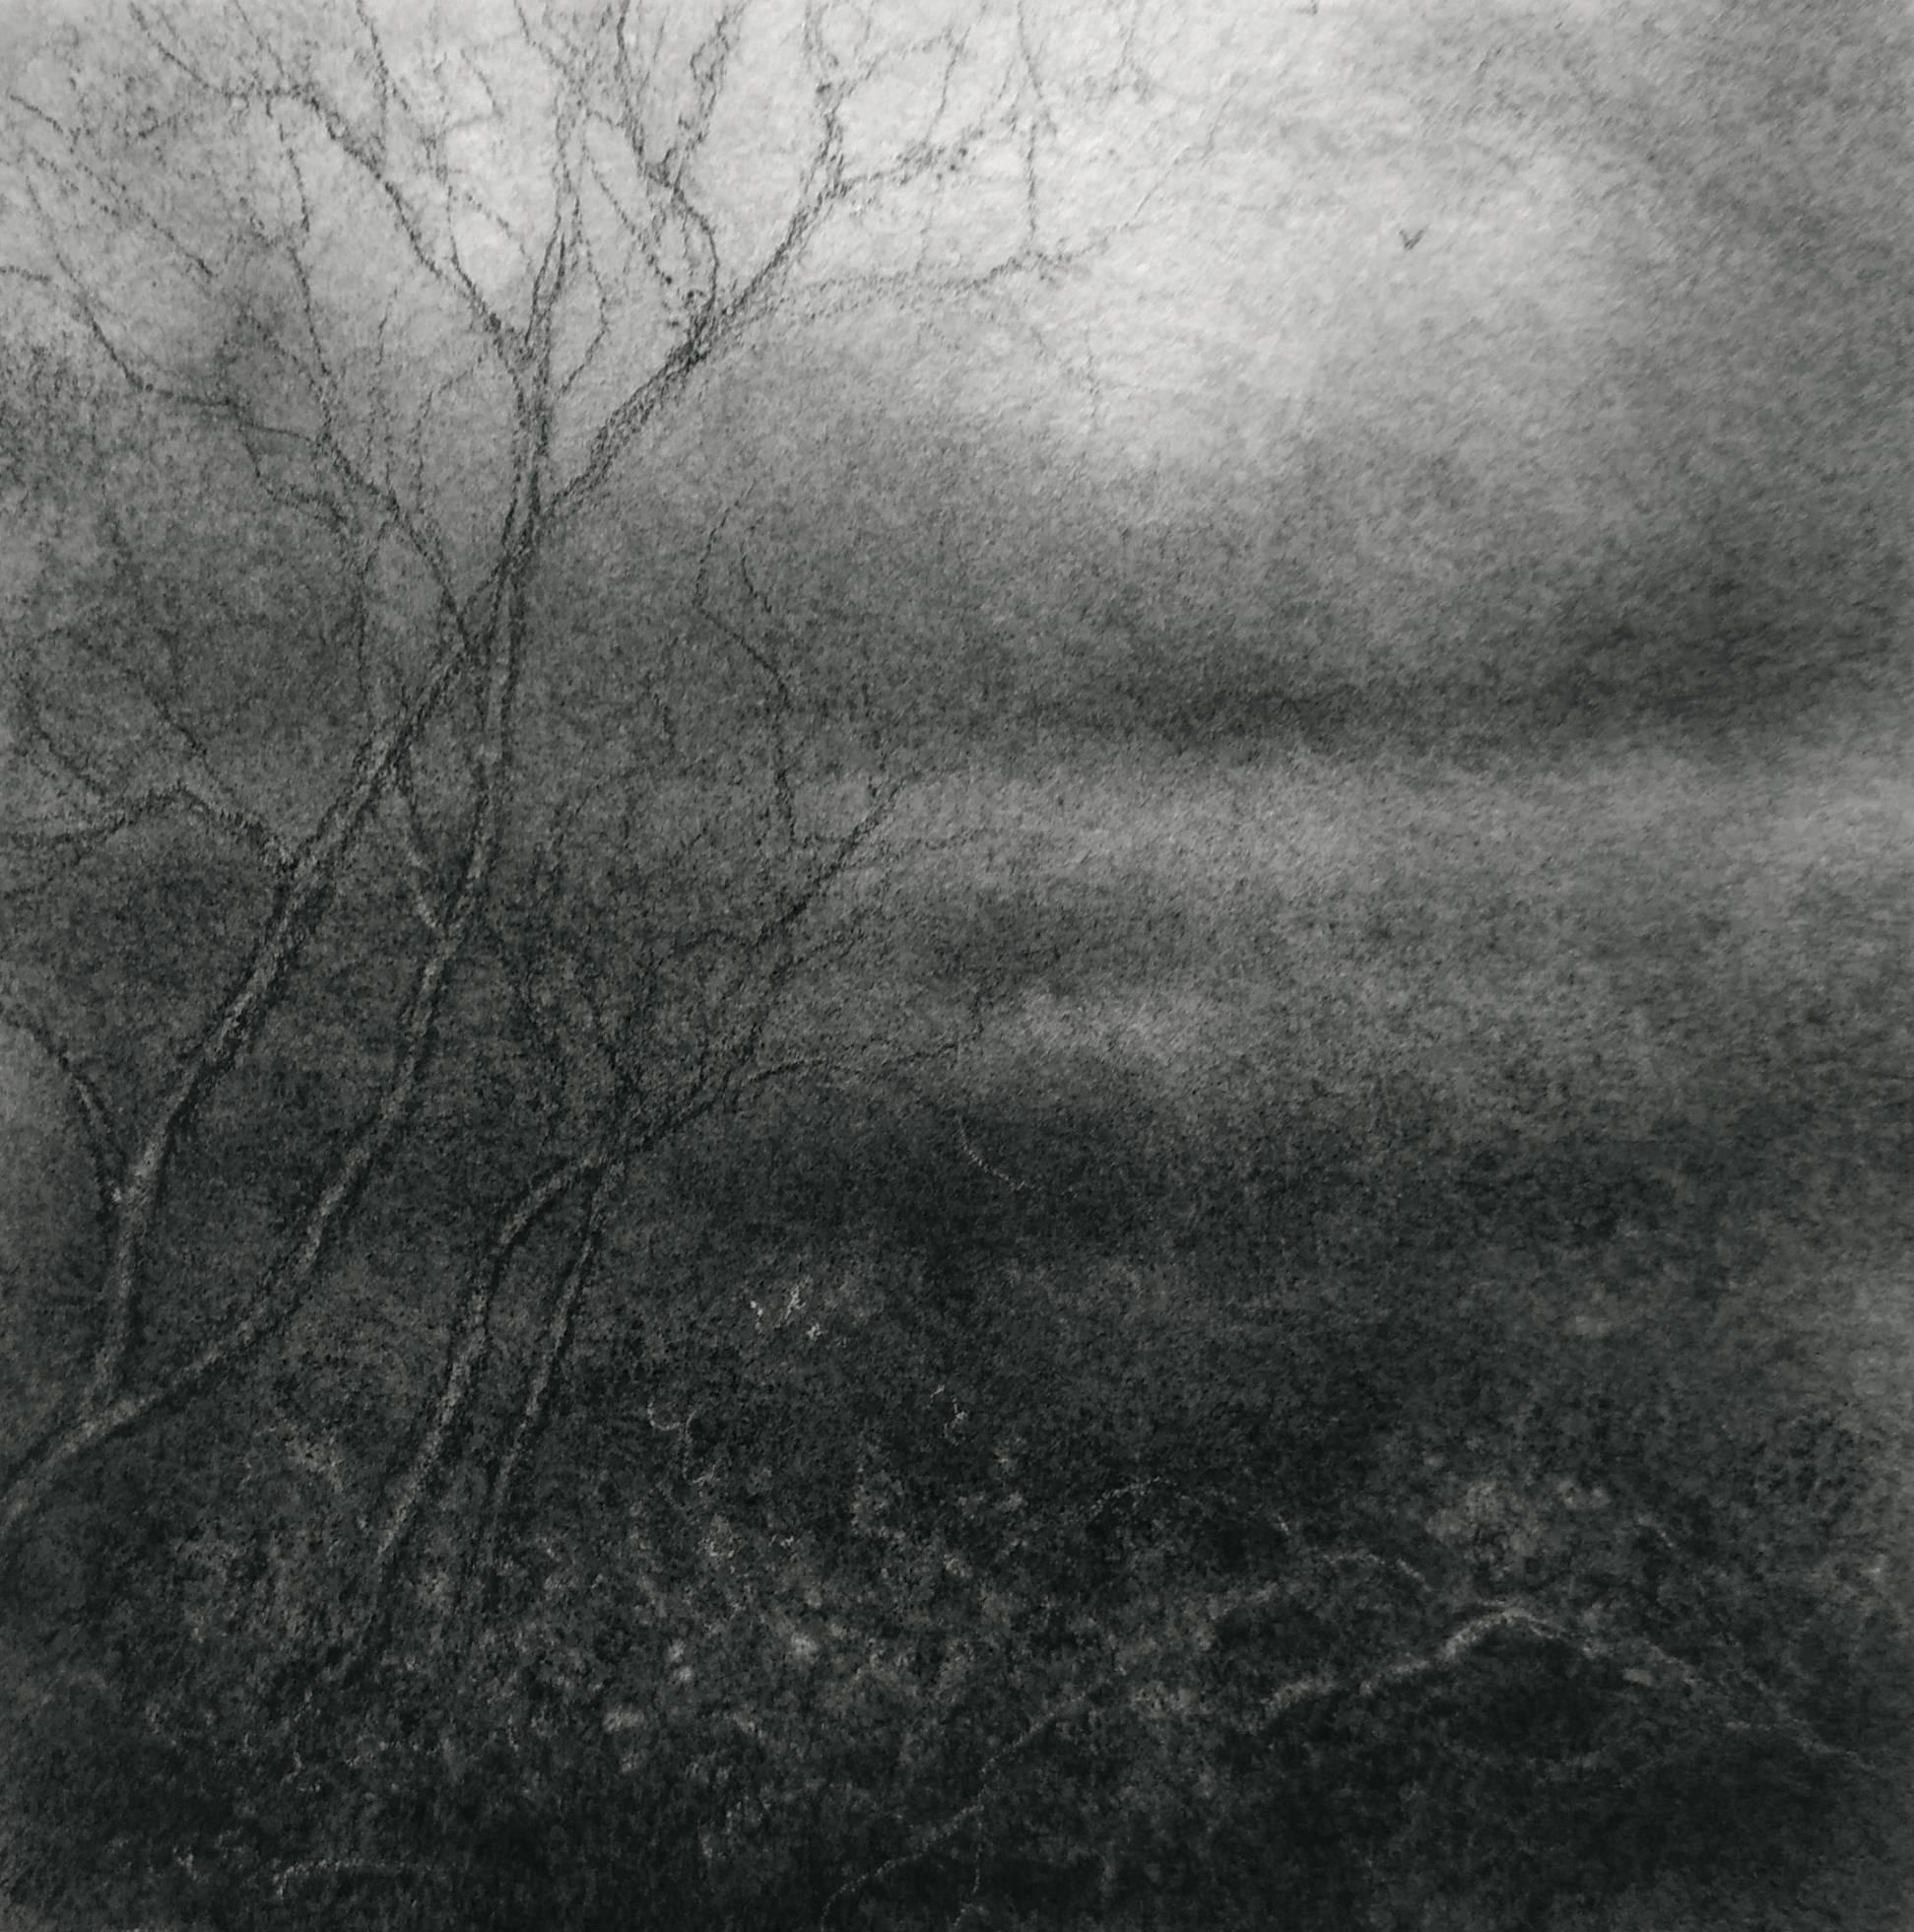 Sue Bryan Landscape Art - Edgeland L (Small Contemporary Realistic Landscape of Forest in Black Charcoal)